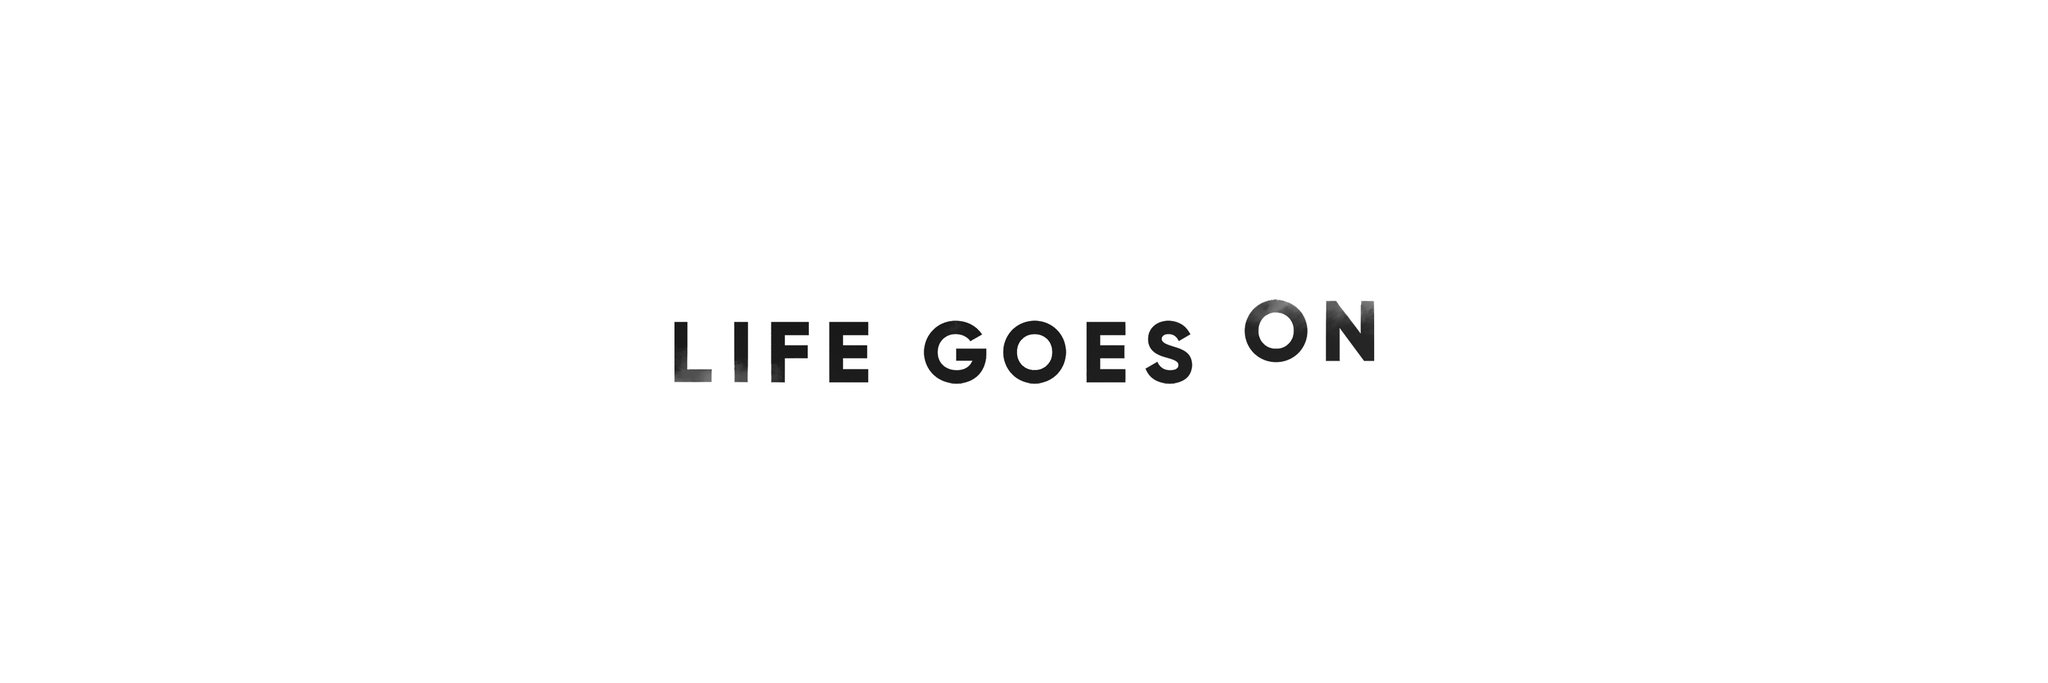 Life s goes on. Лайф Гоес он. Life goes on BTS надпись. Life goes on надпись. Life goes on BTS logo.